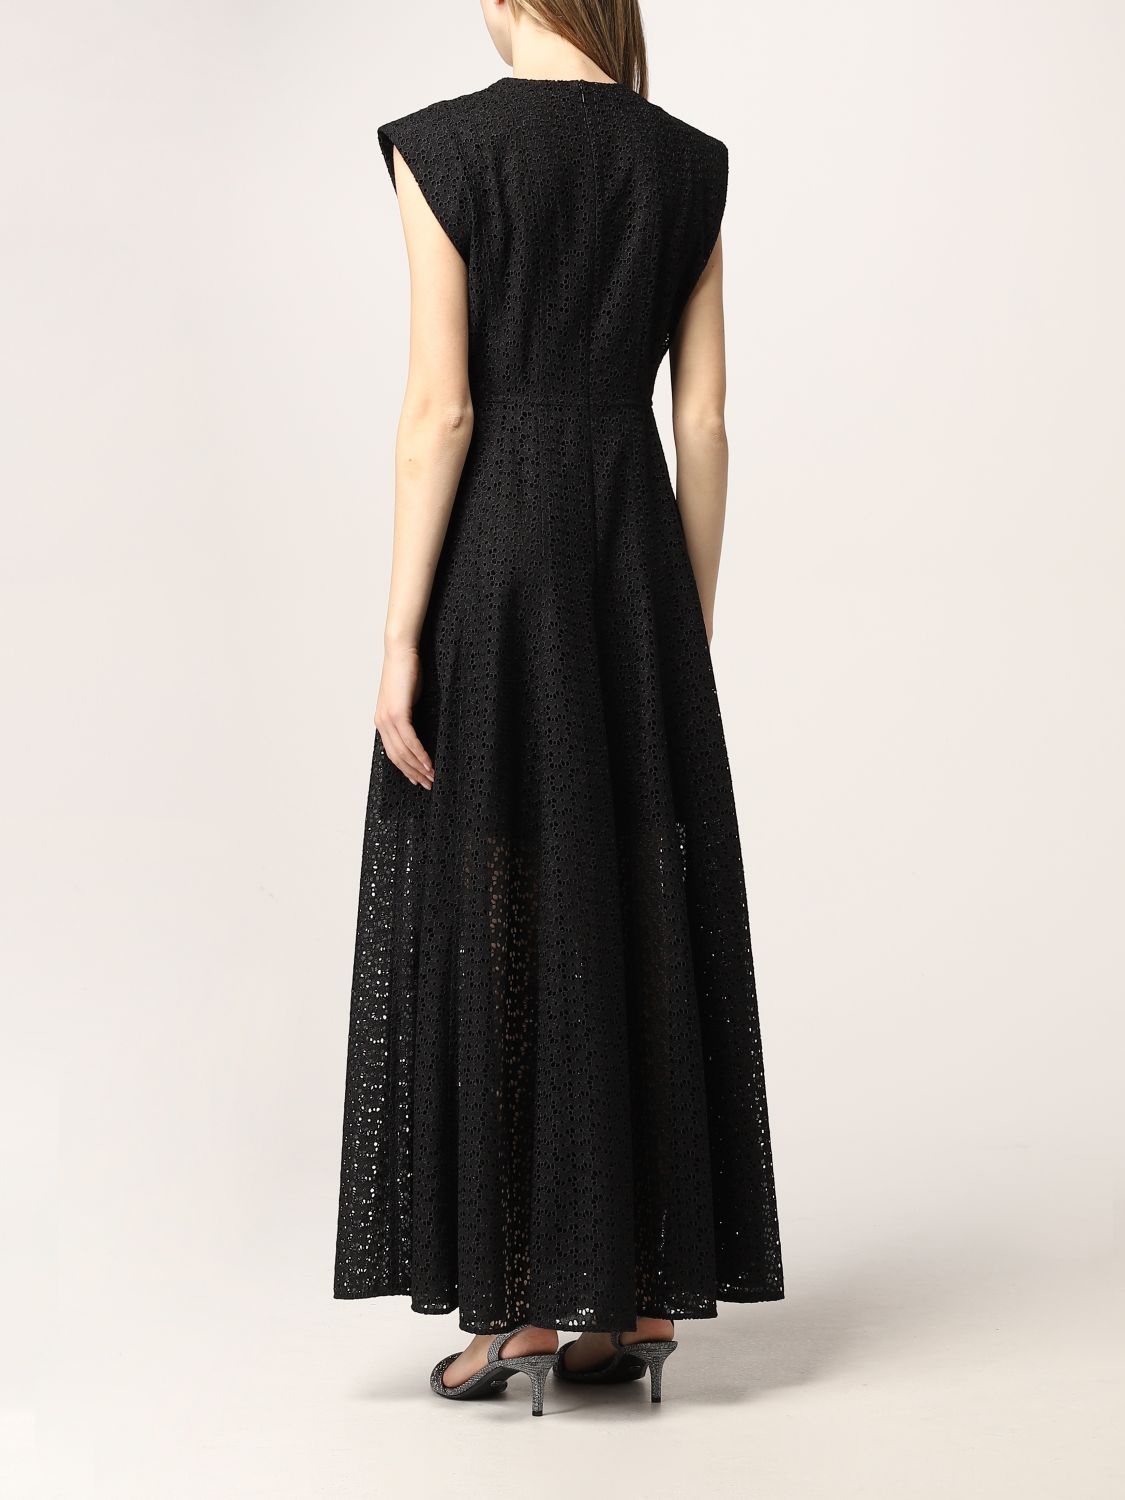 Dress Philosophy Di Lorenzo Serafini: Philosophy Di Lorenzo Serafini dress with floral embroidery black 2